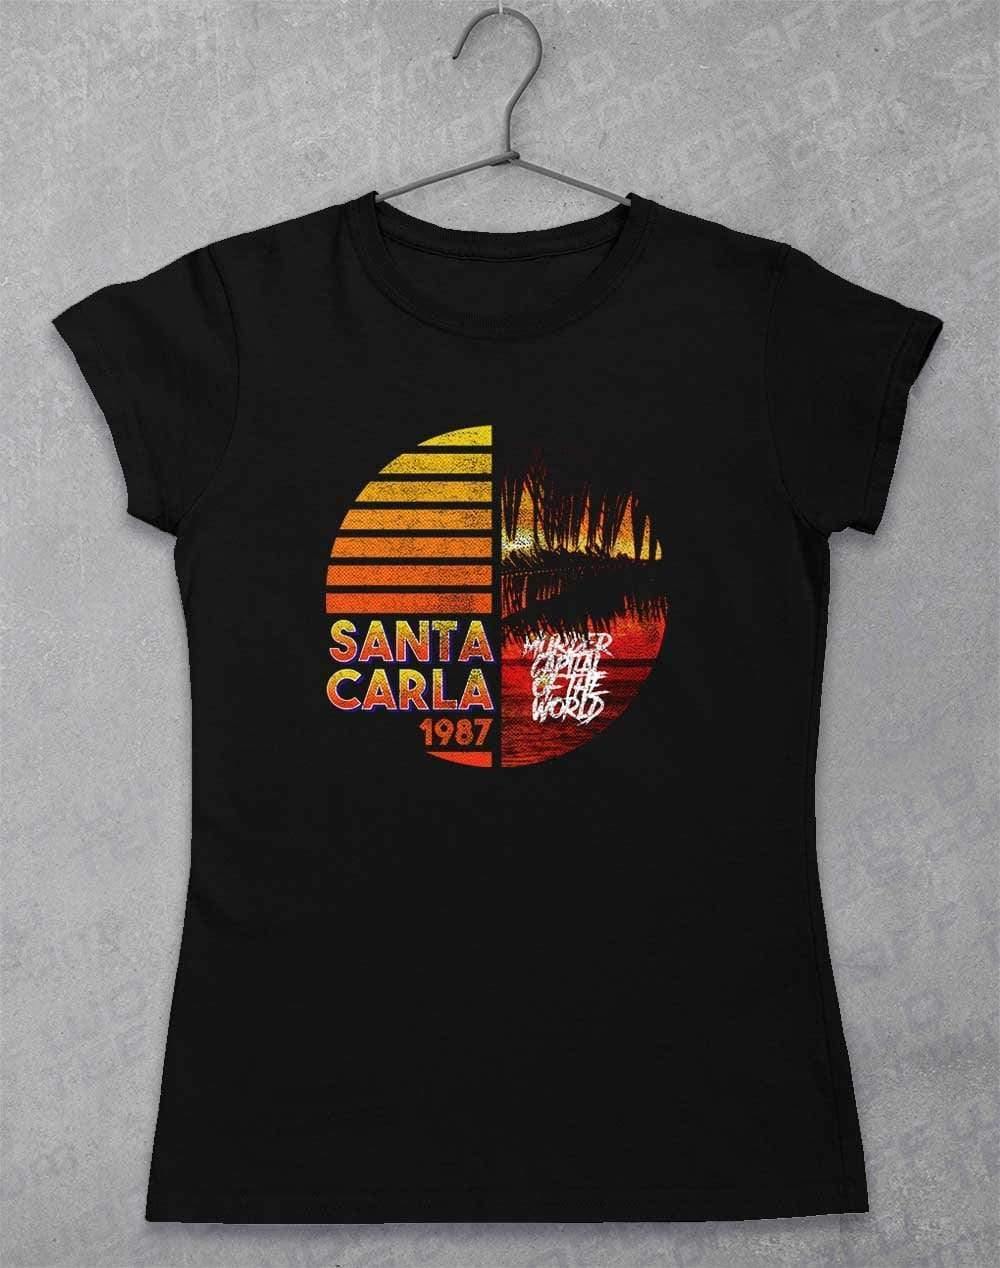 Santa Carla 1987 - Womens T-Shirt 8-10 / Black  - Off World Tees